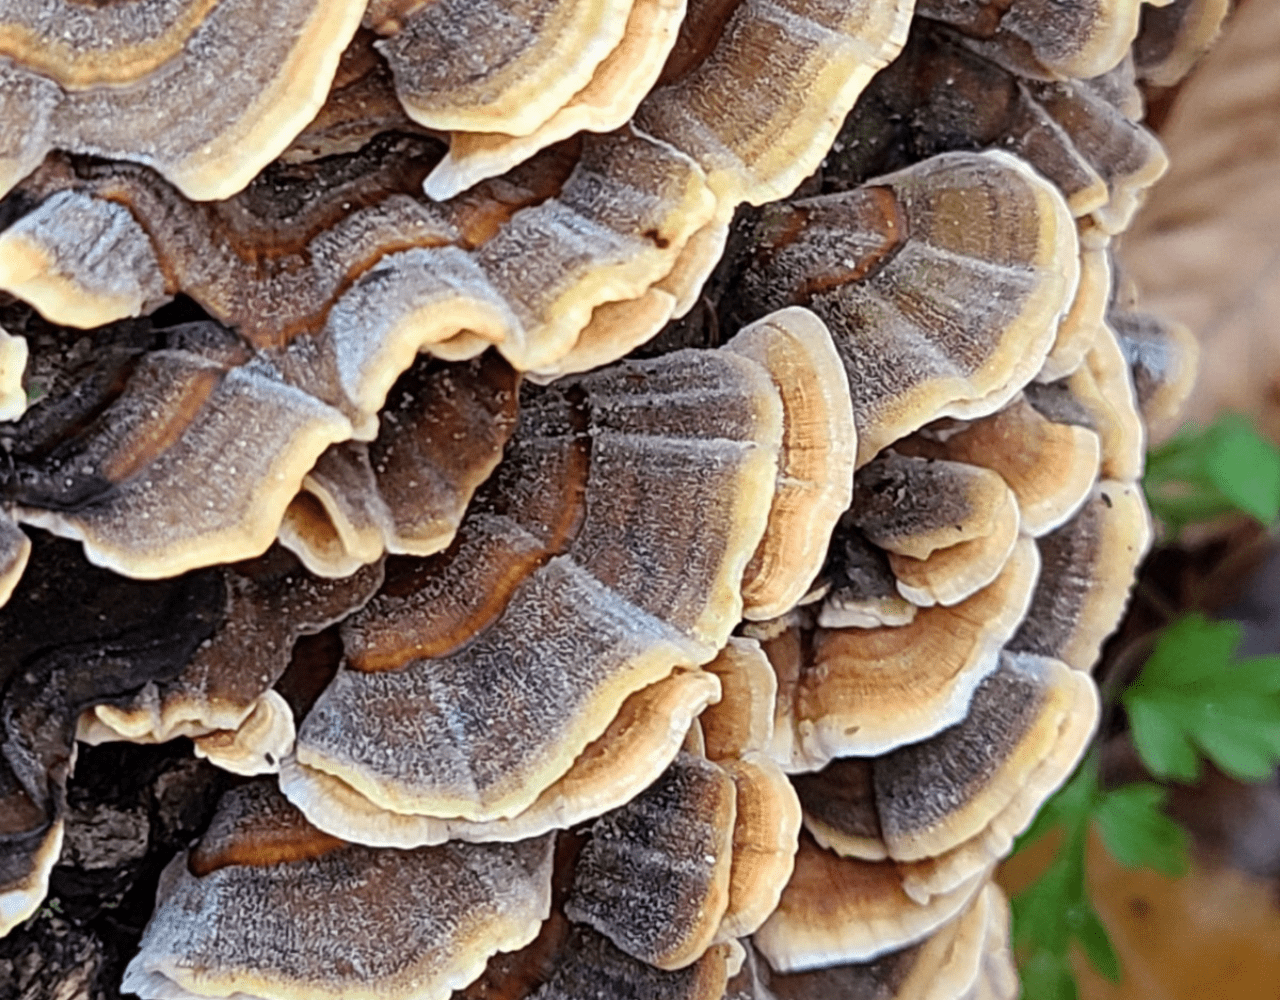 adaptogenic mushroom variety growing in wild